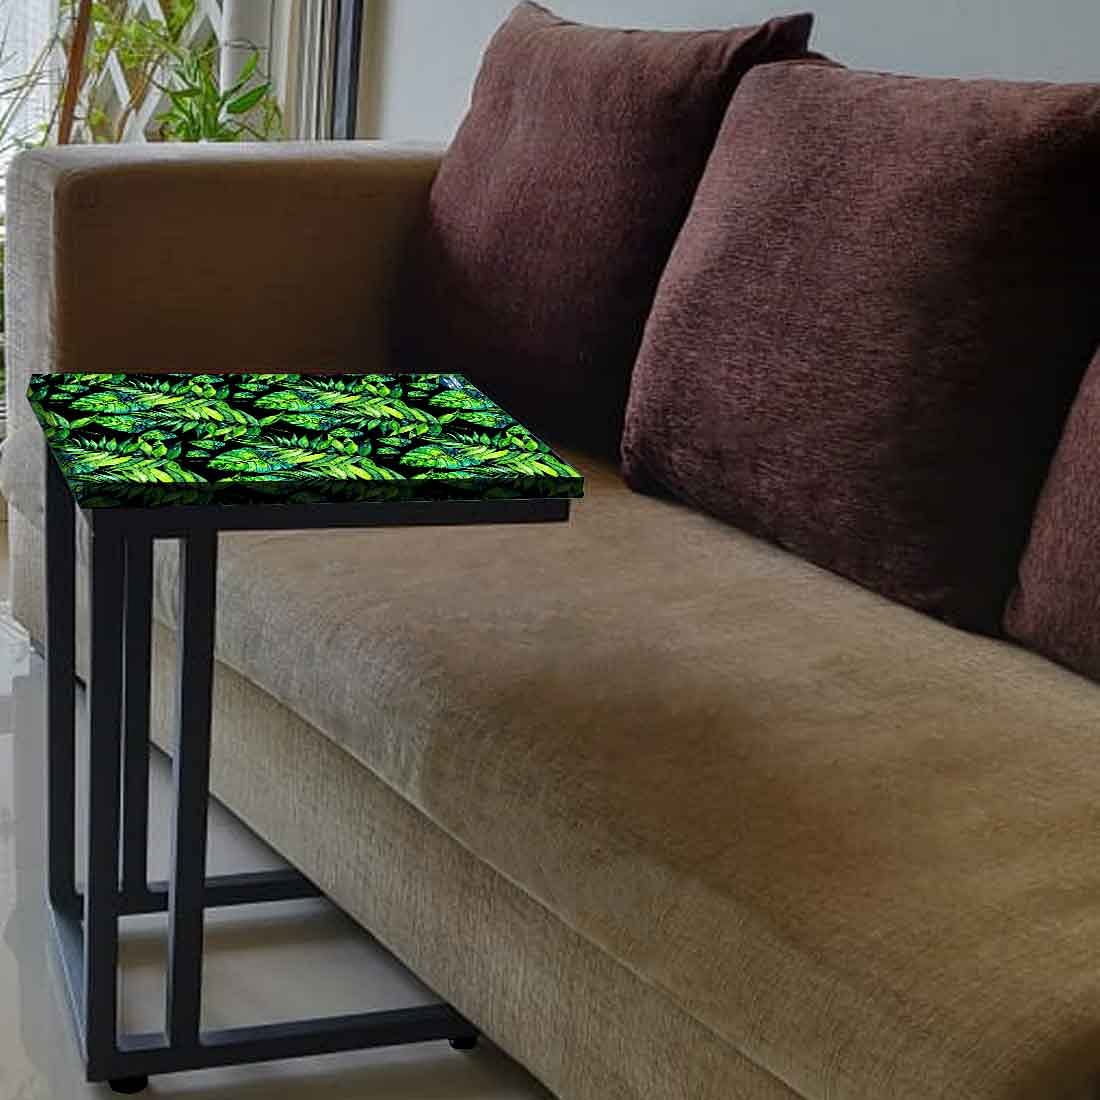 Small Metal C Table For Sofa - Green Tropical Nutcase